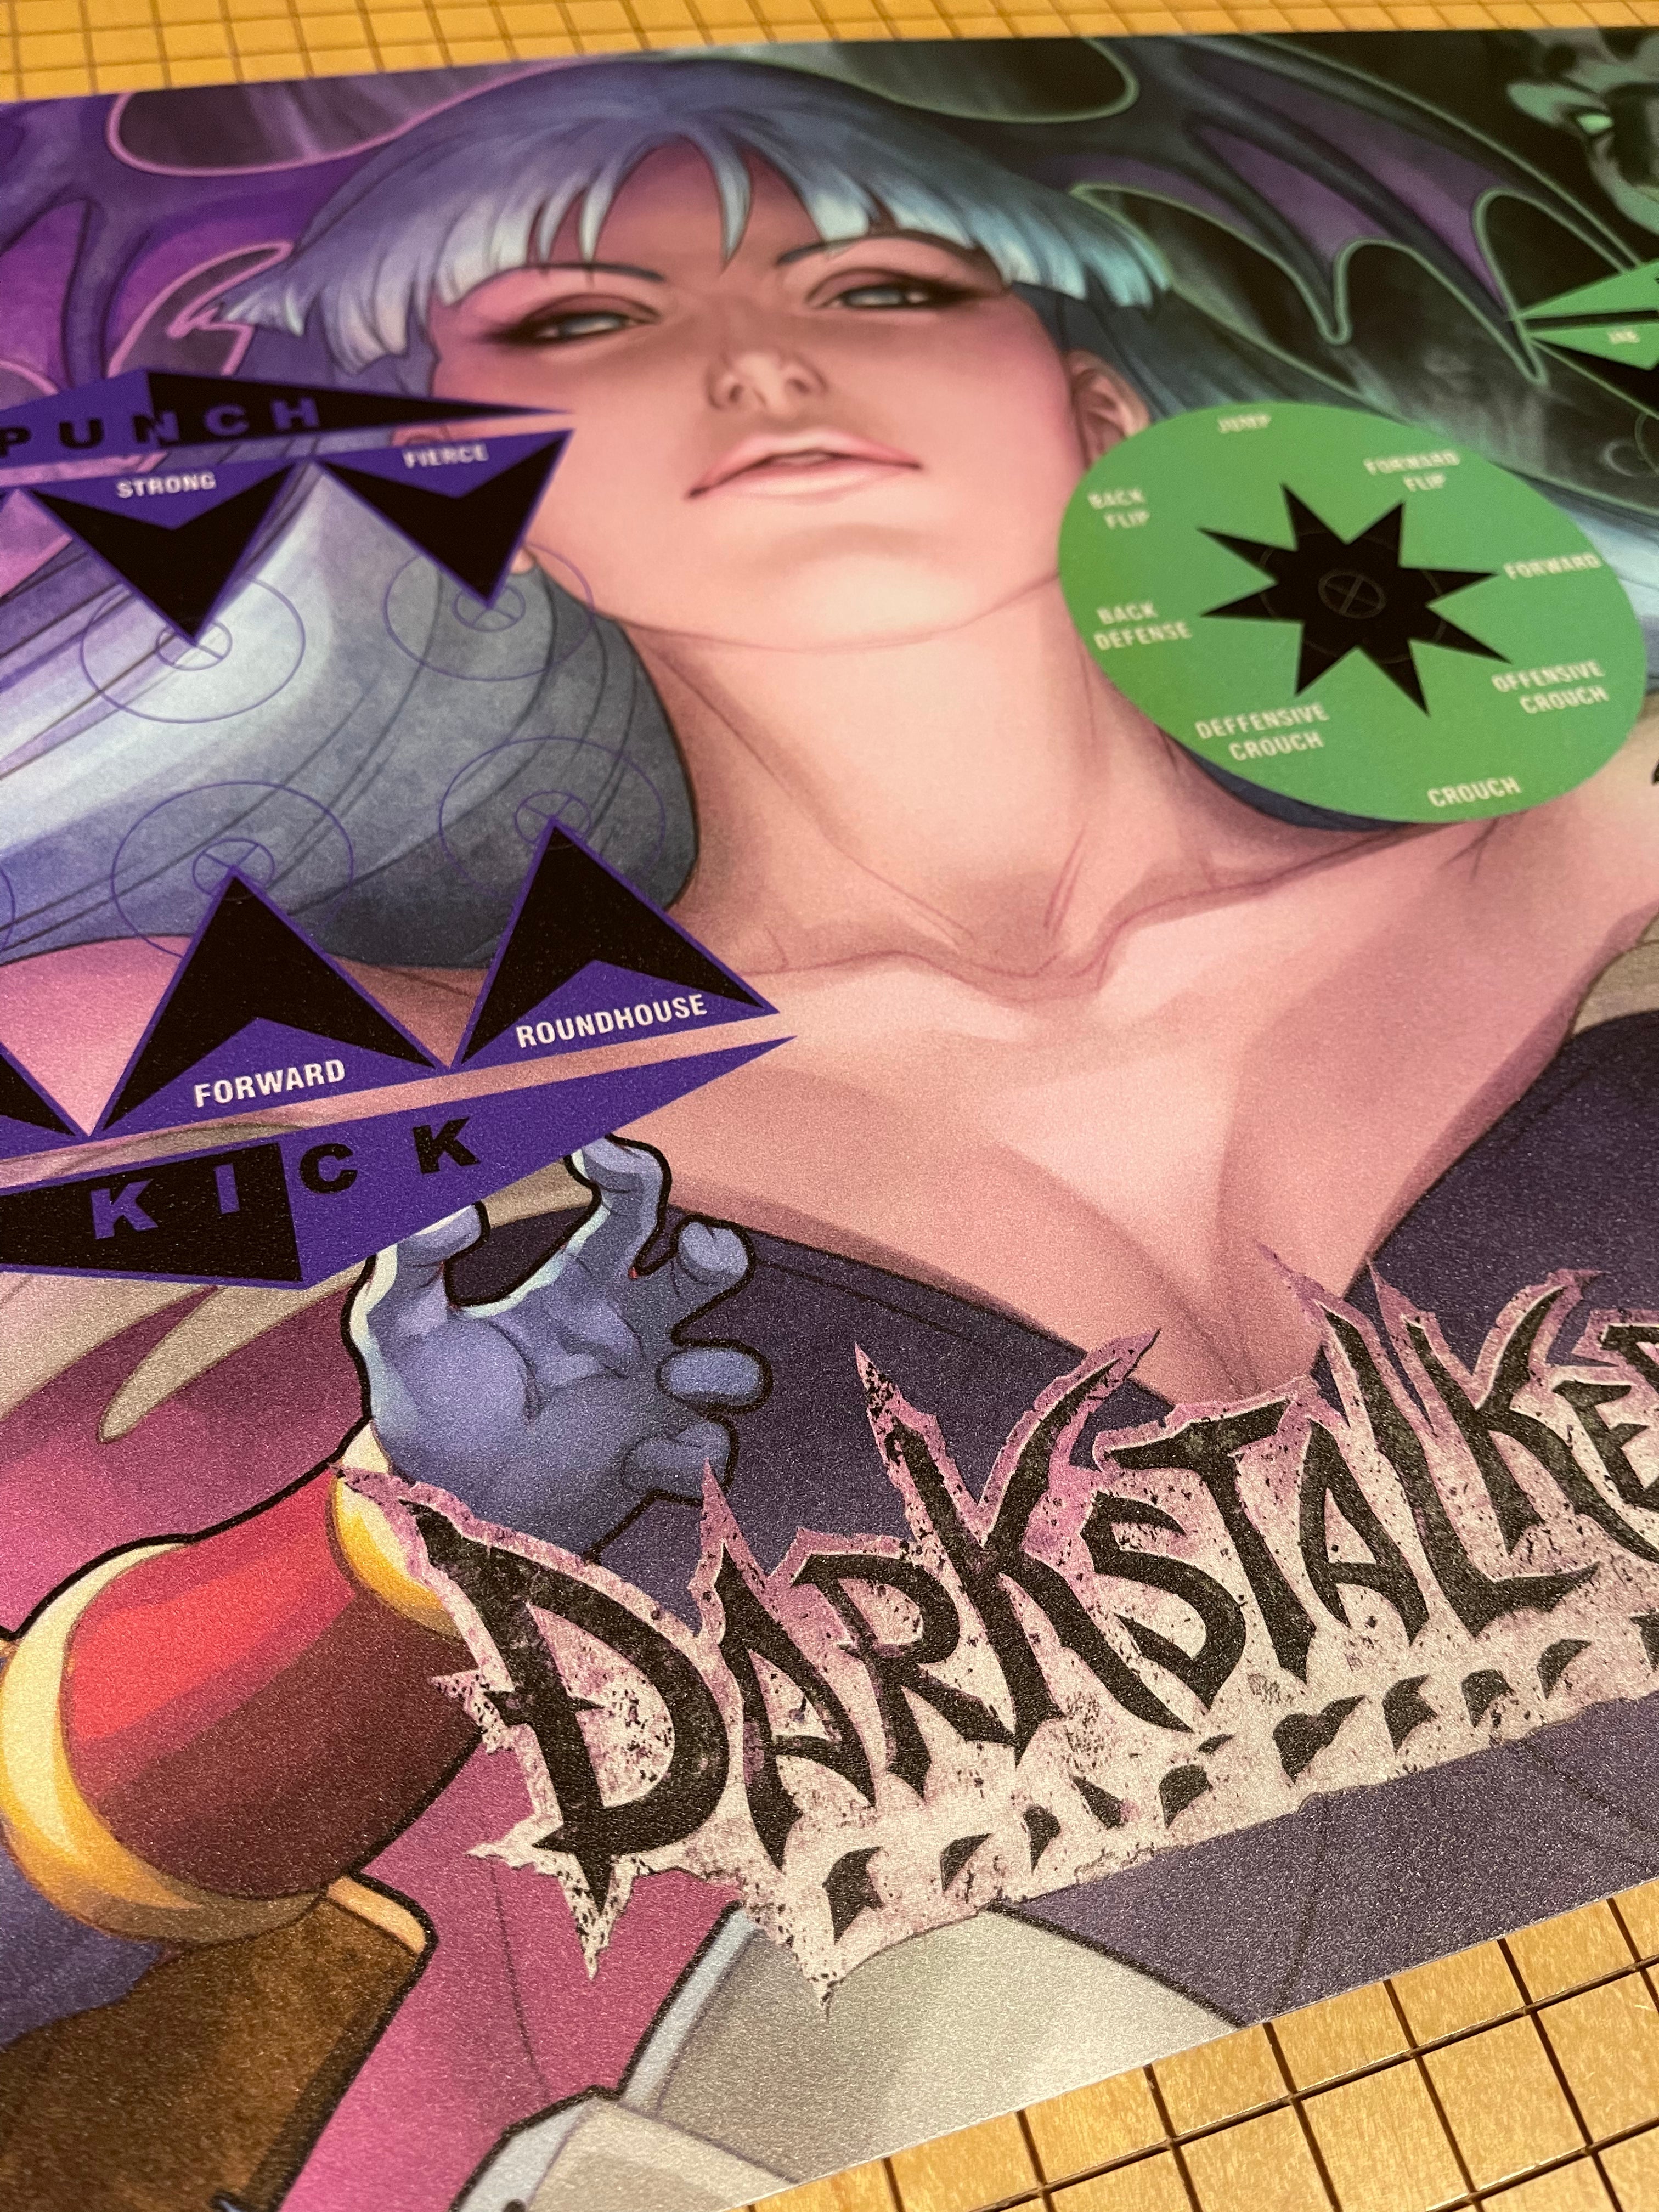 Darkstalkers Complete Art Kit